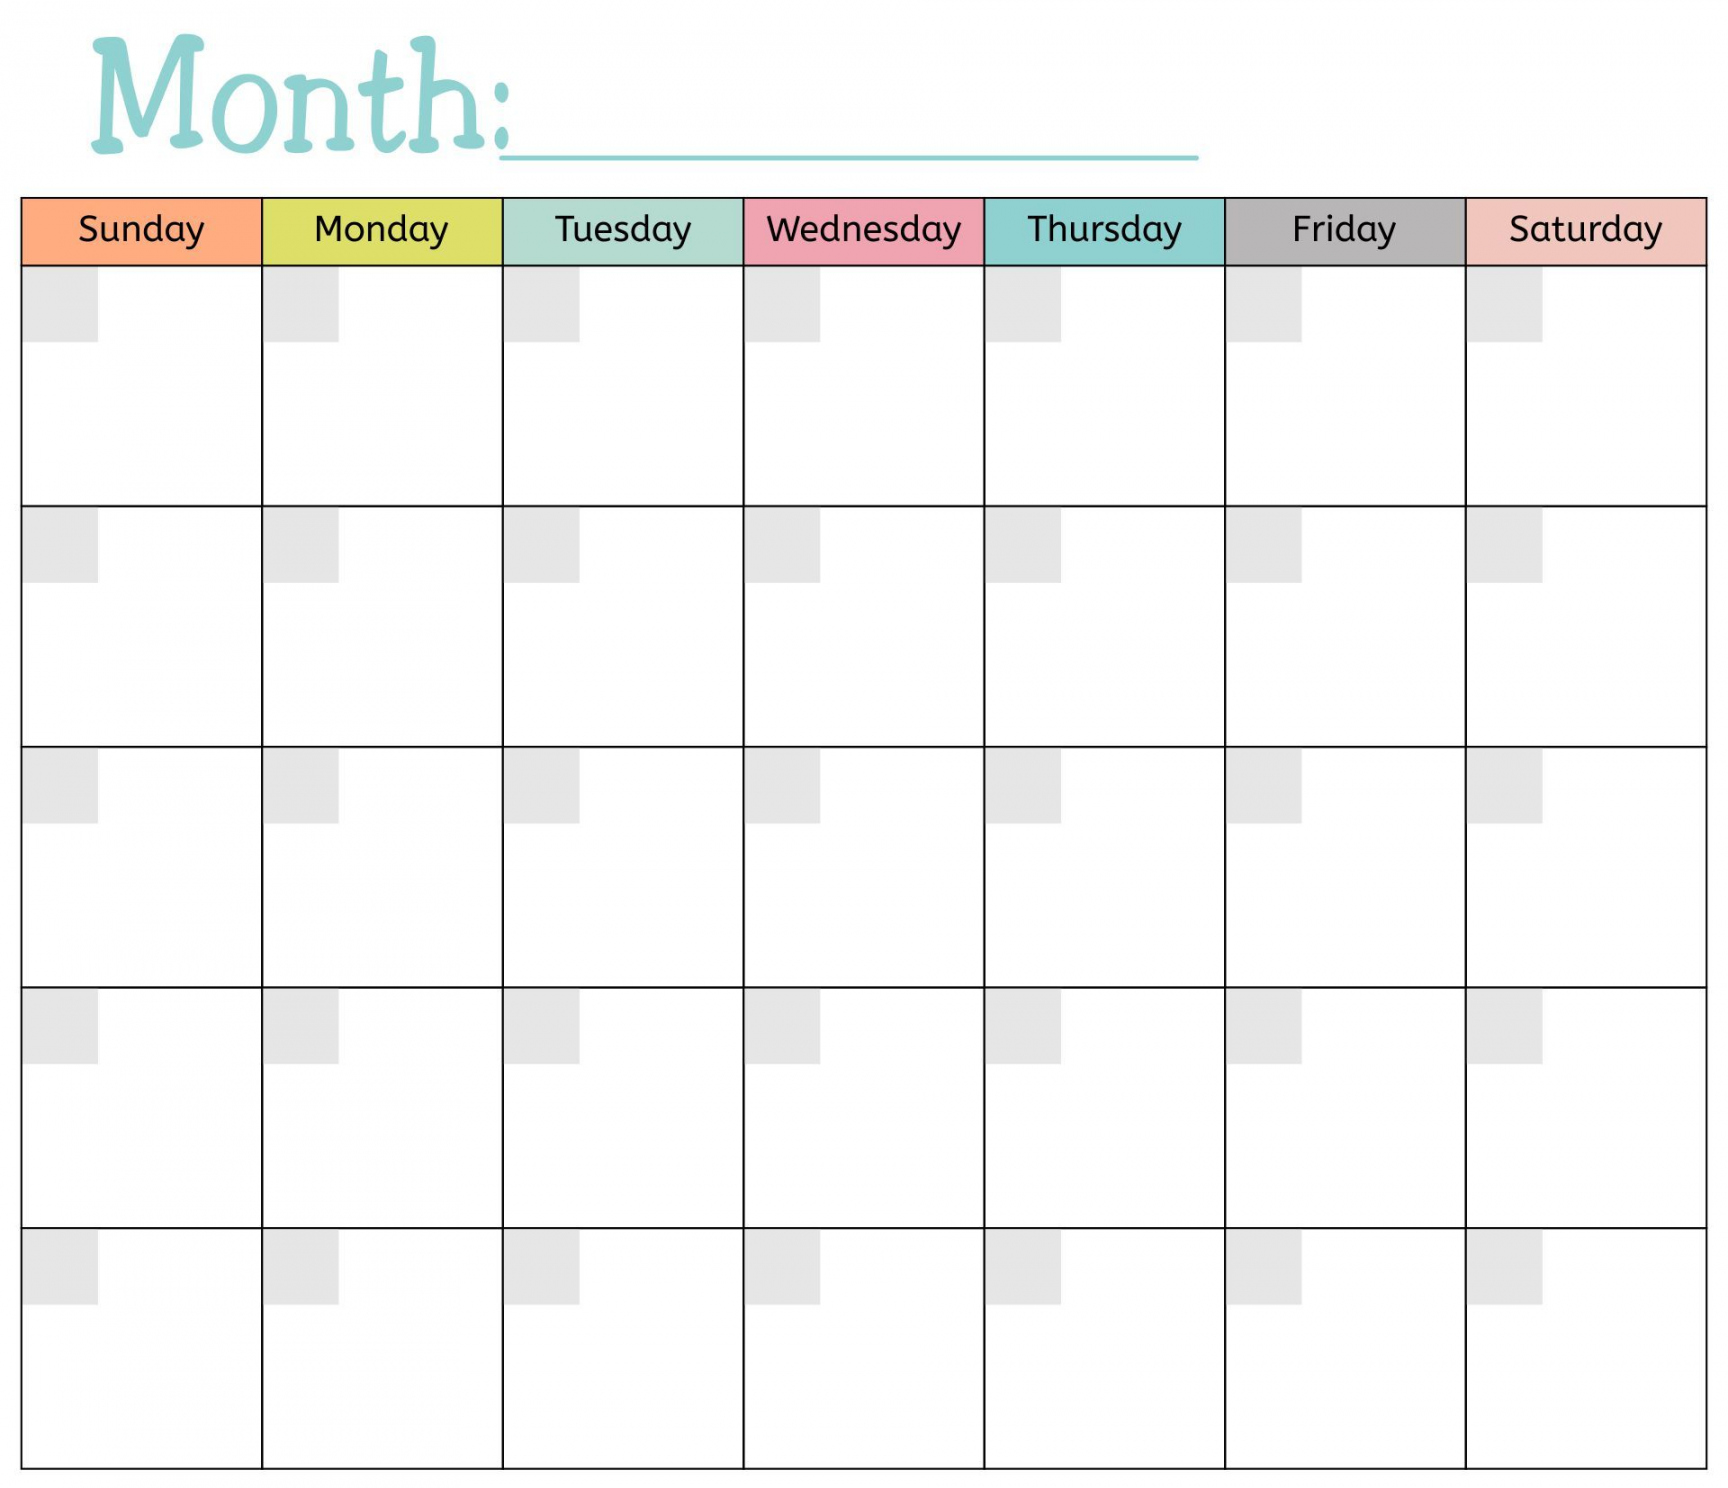 Monthly Calendar Free Printable - Printable - Blank Monthly Calendar Printable Free  Blank monthly calendar